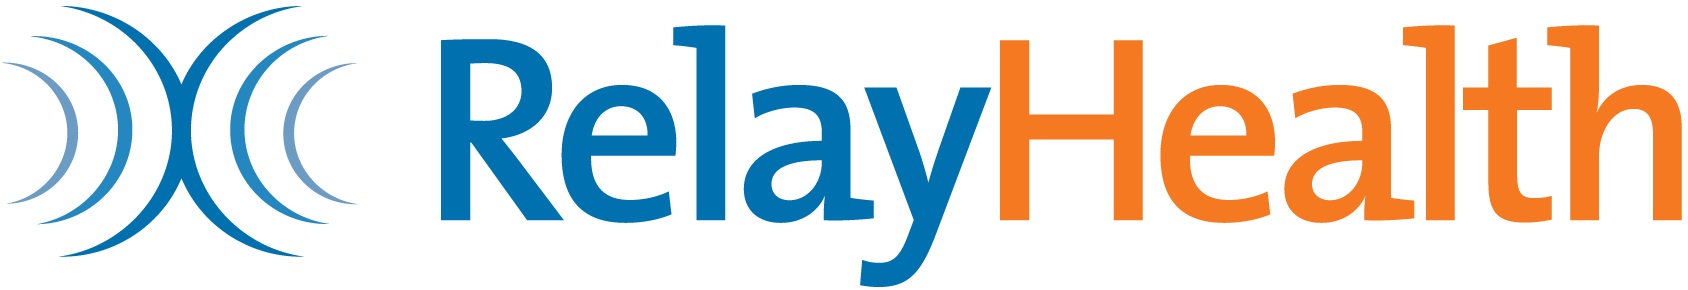 RelayHealth Logo